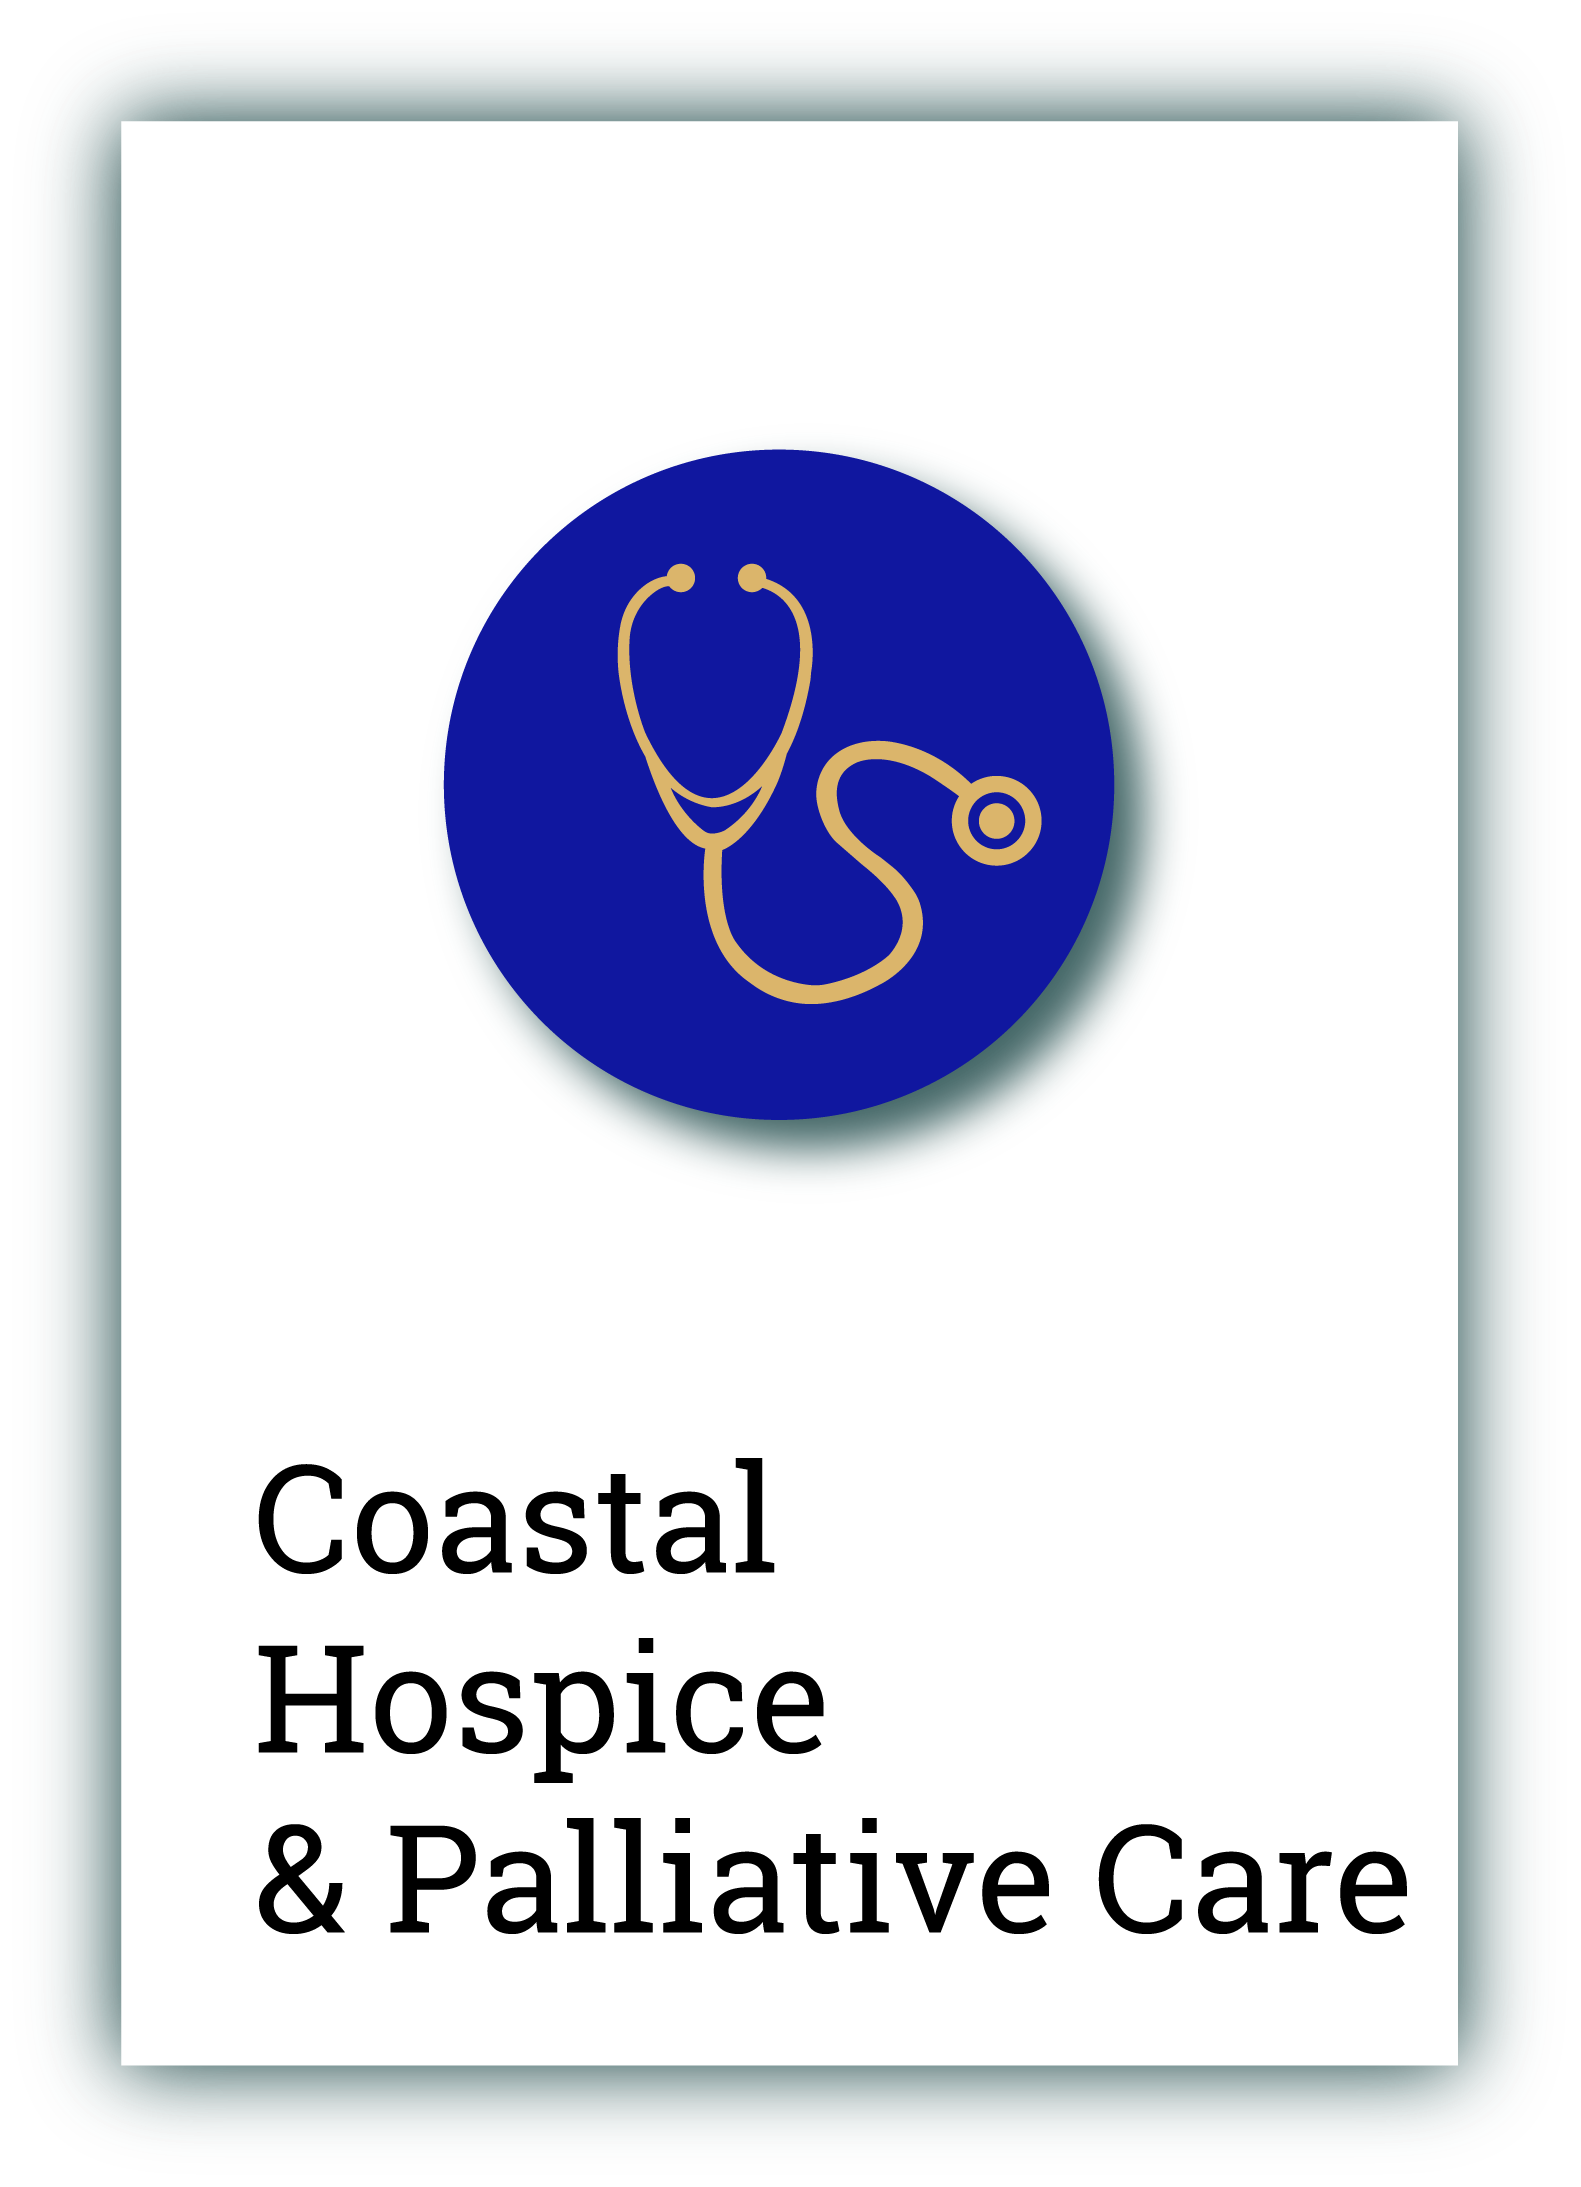 Coastal Hospice & Palliative Care